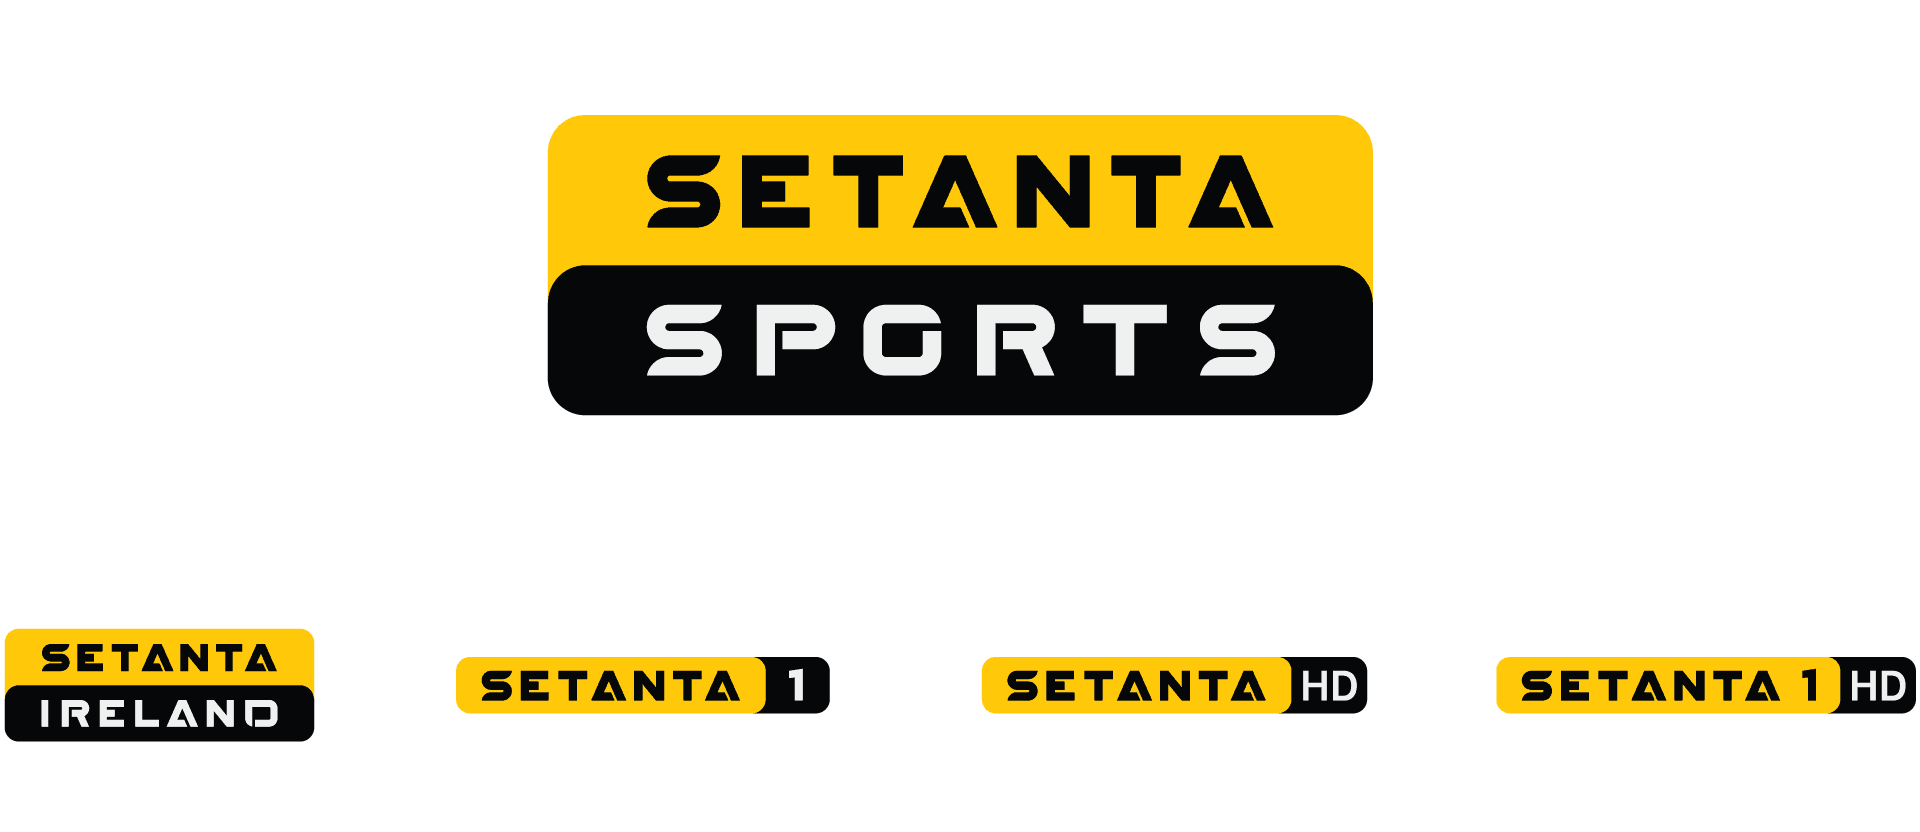 Сетанта спорт 1 прямой. Сетанта спорт 1 Евразия. Setanta Sport логотип Телеканал. Setanta Sports 1 HD логотип. Сетанта спорт + HD.